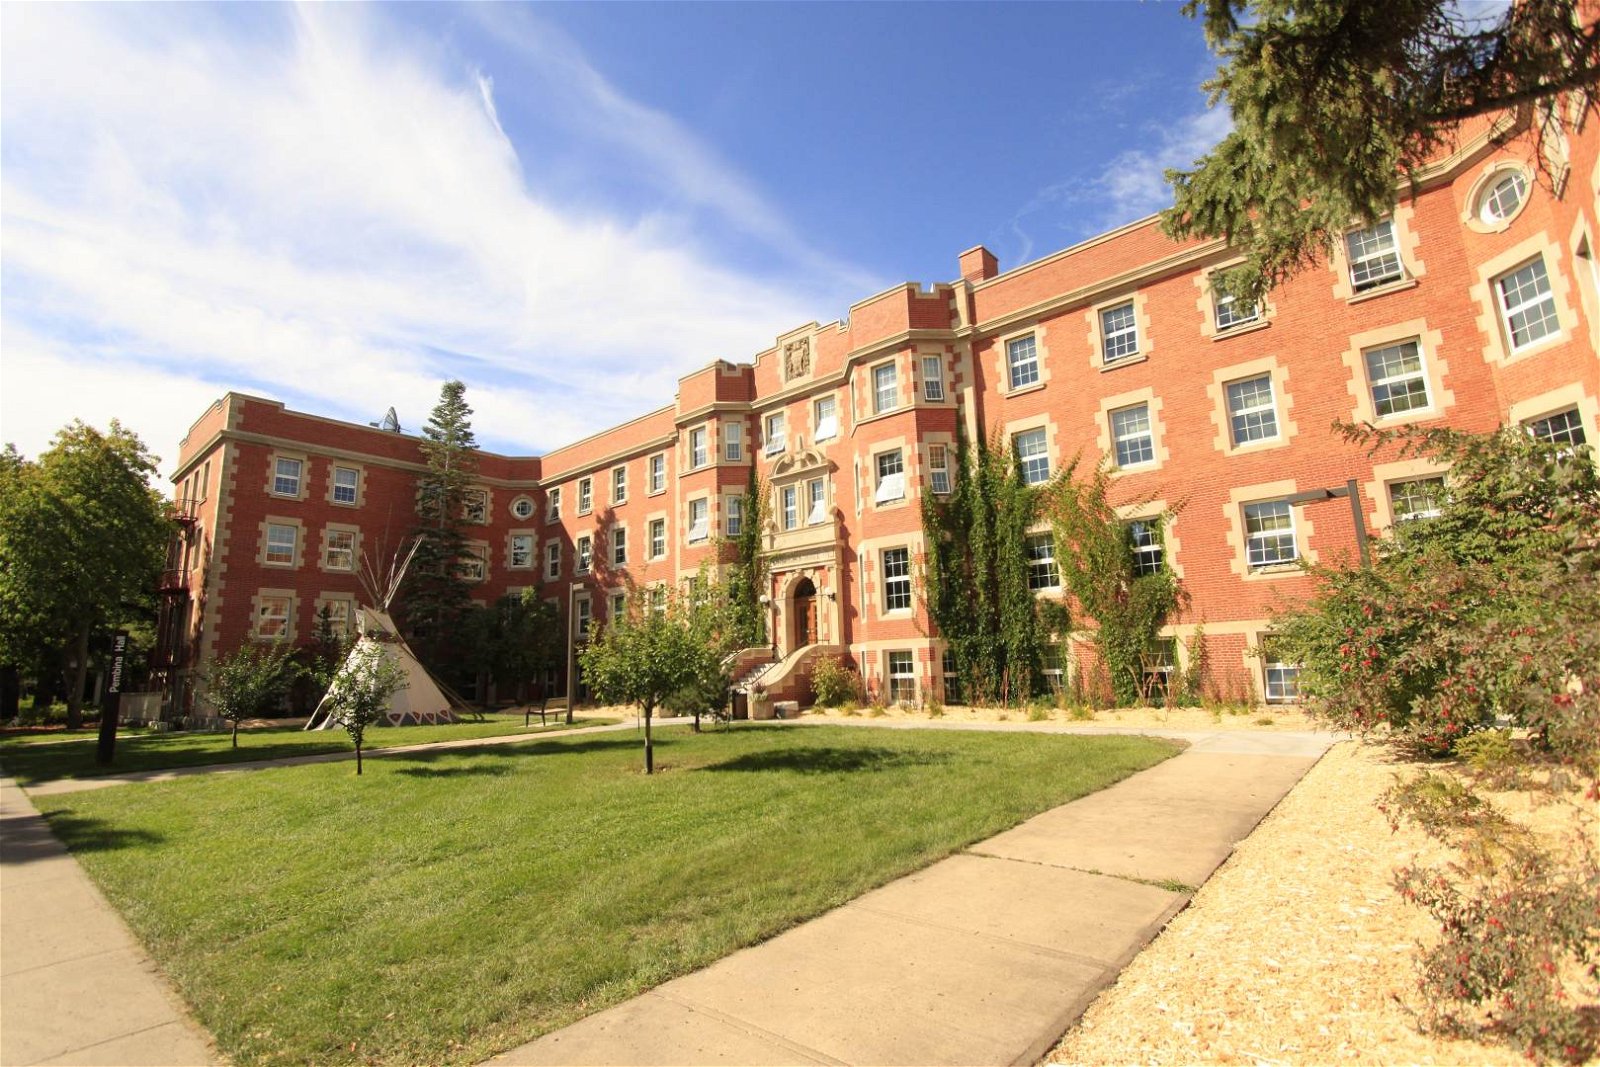 University of Alberta Athabasca Hall